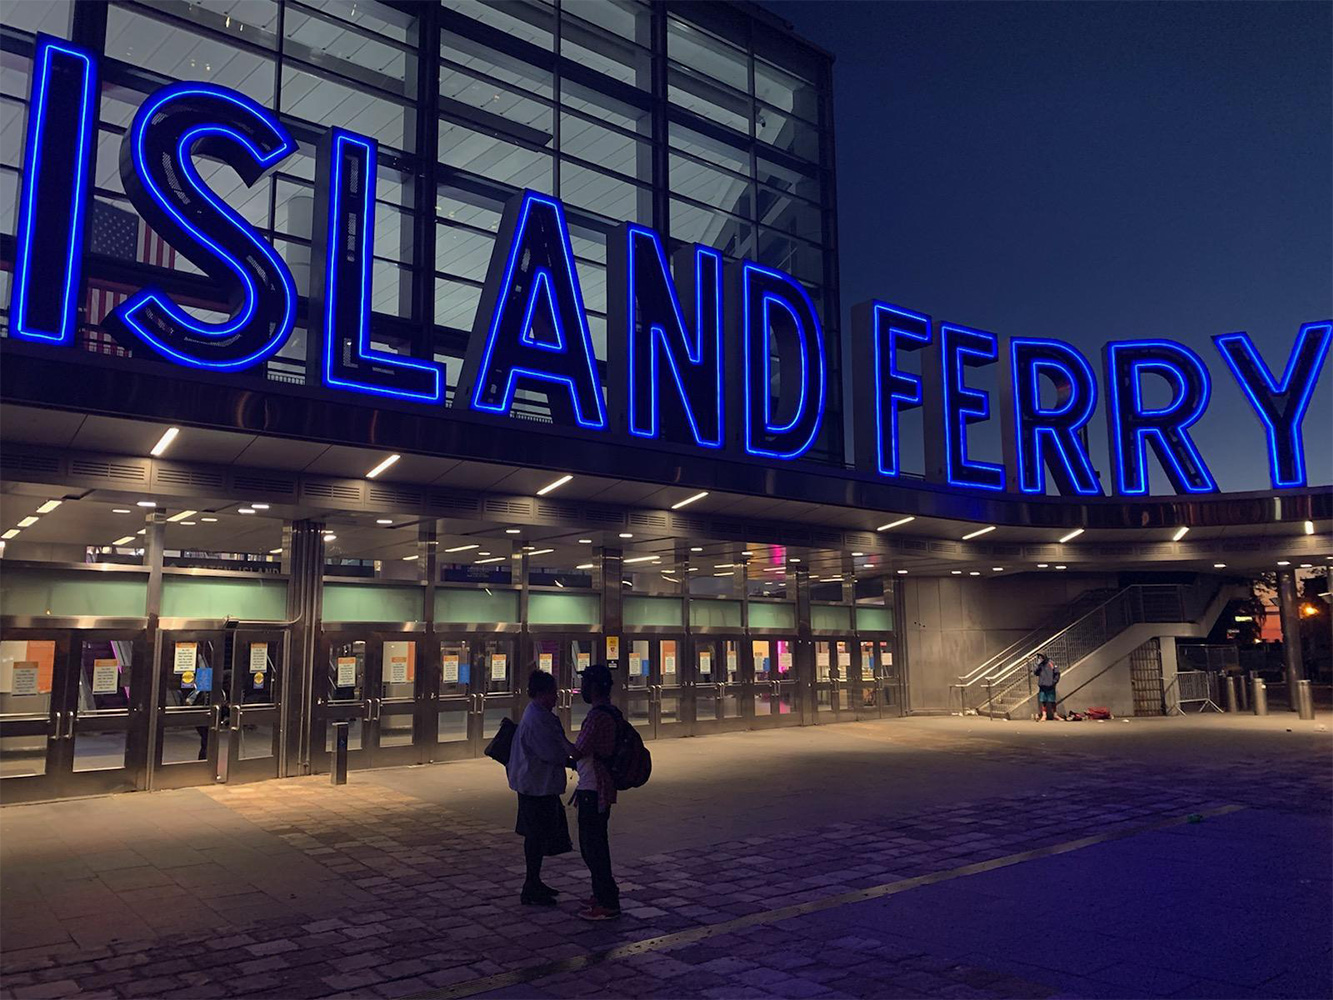 Staten Island Ferry (New York, NY)